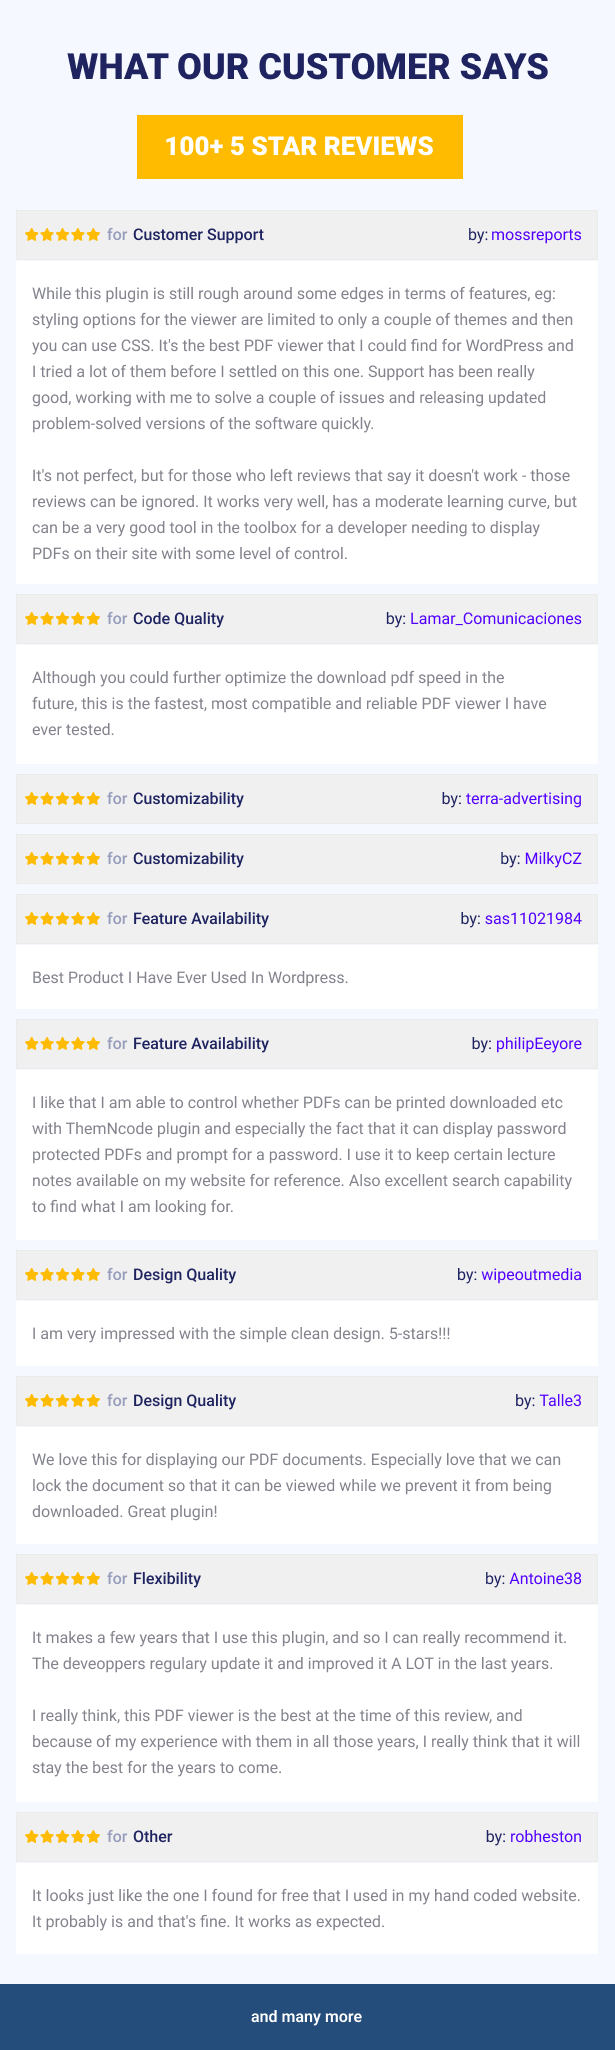 pdf viewer for wordpress reviews